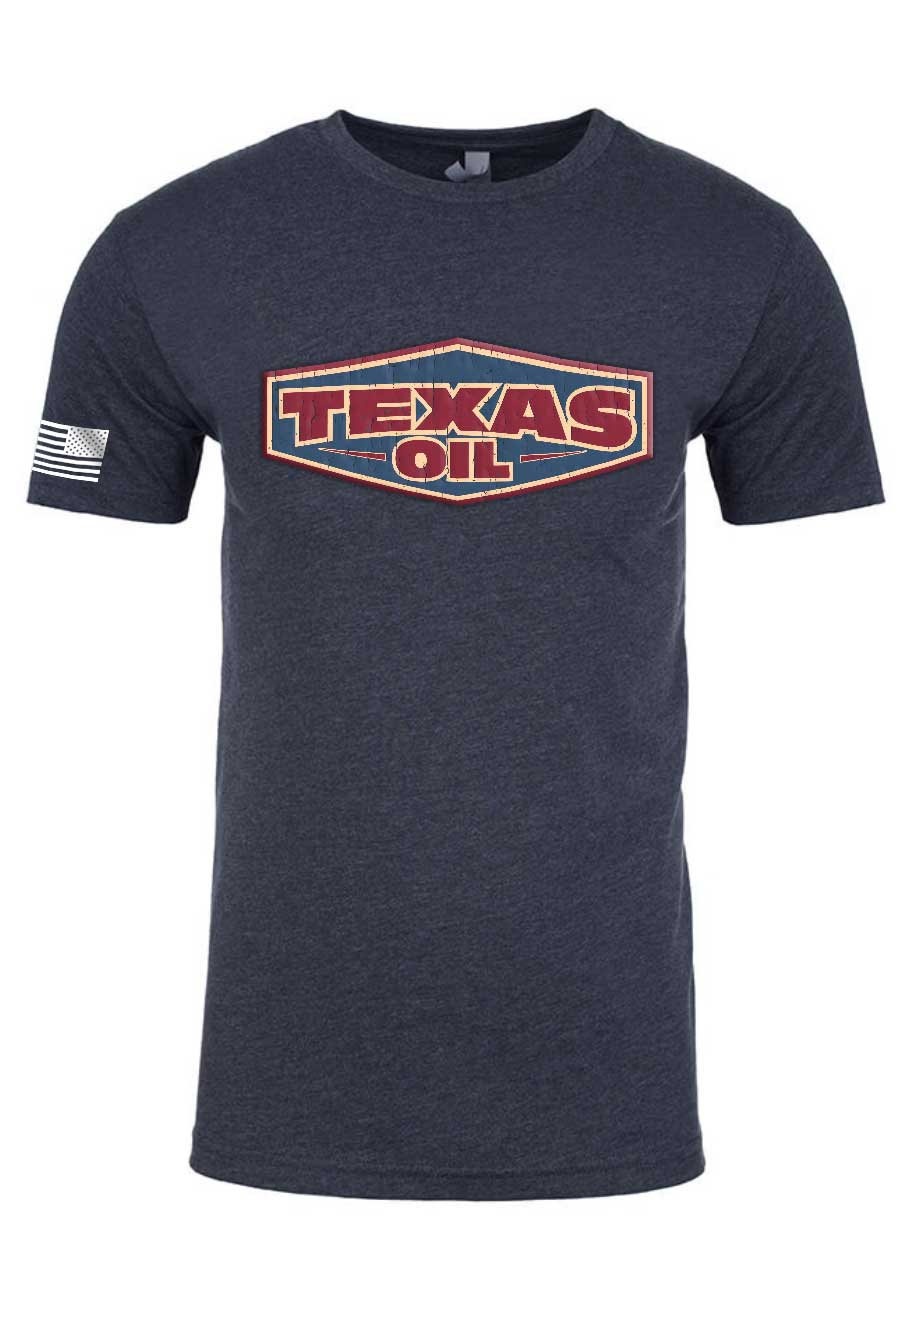 Texas Oil T-shirt - Vintage Navy